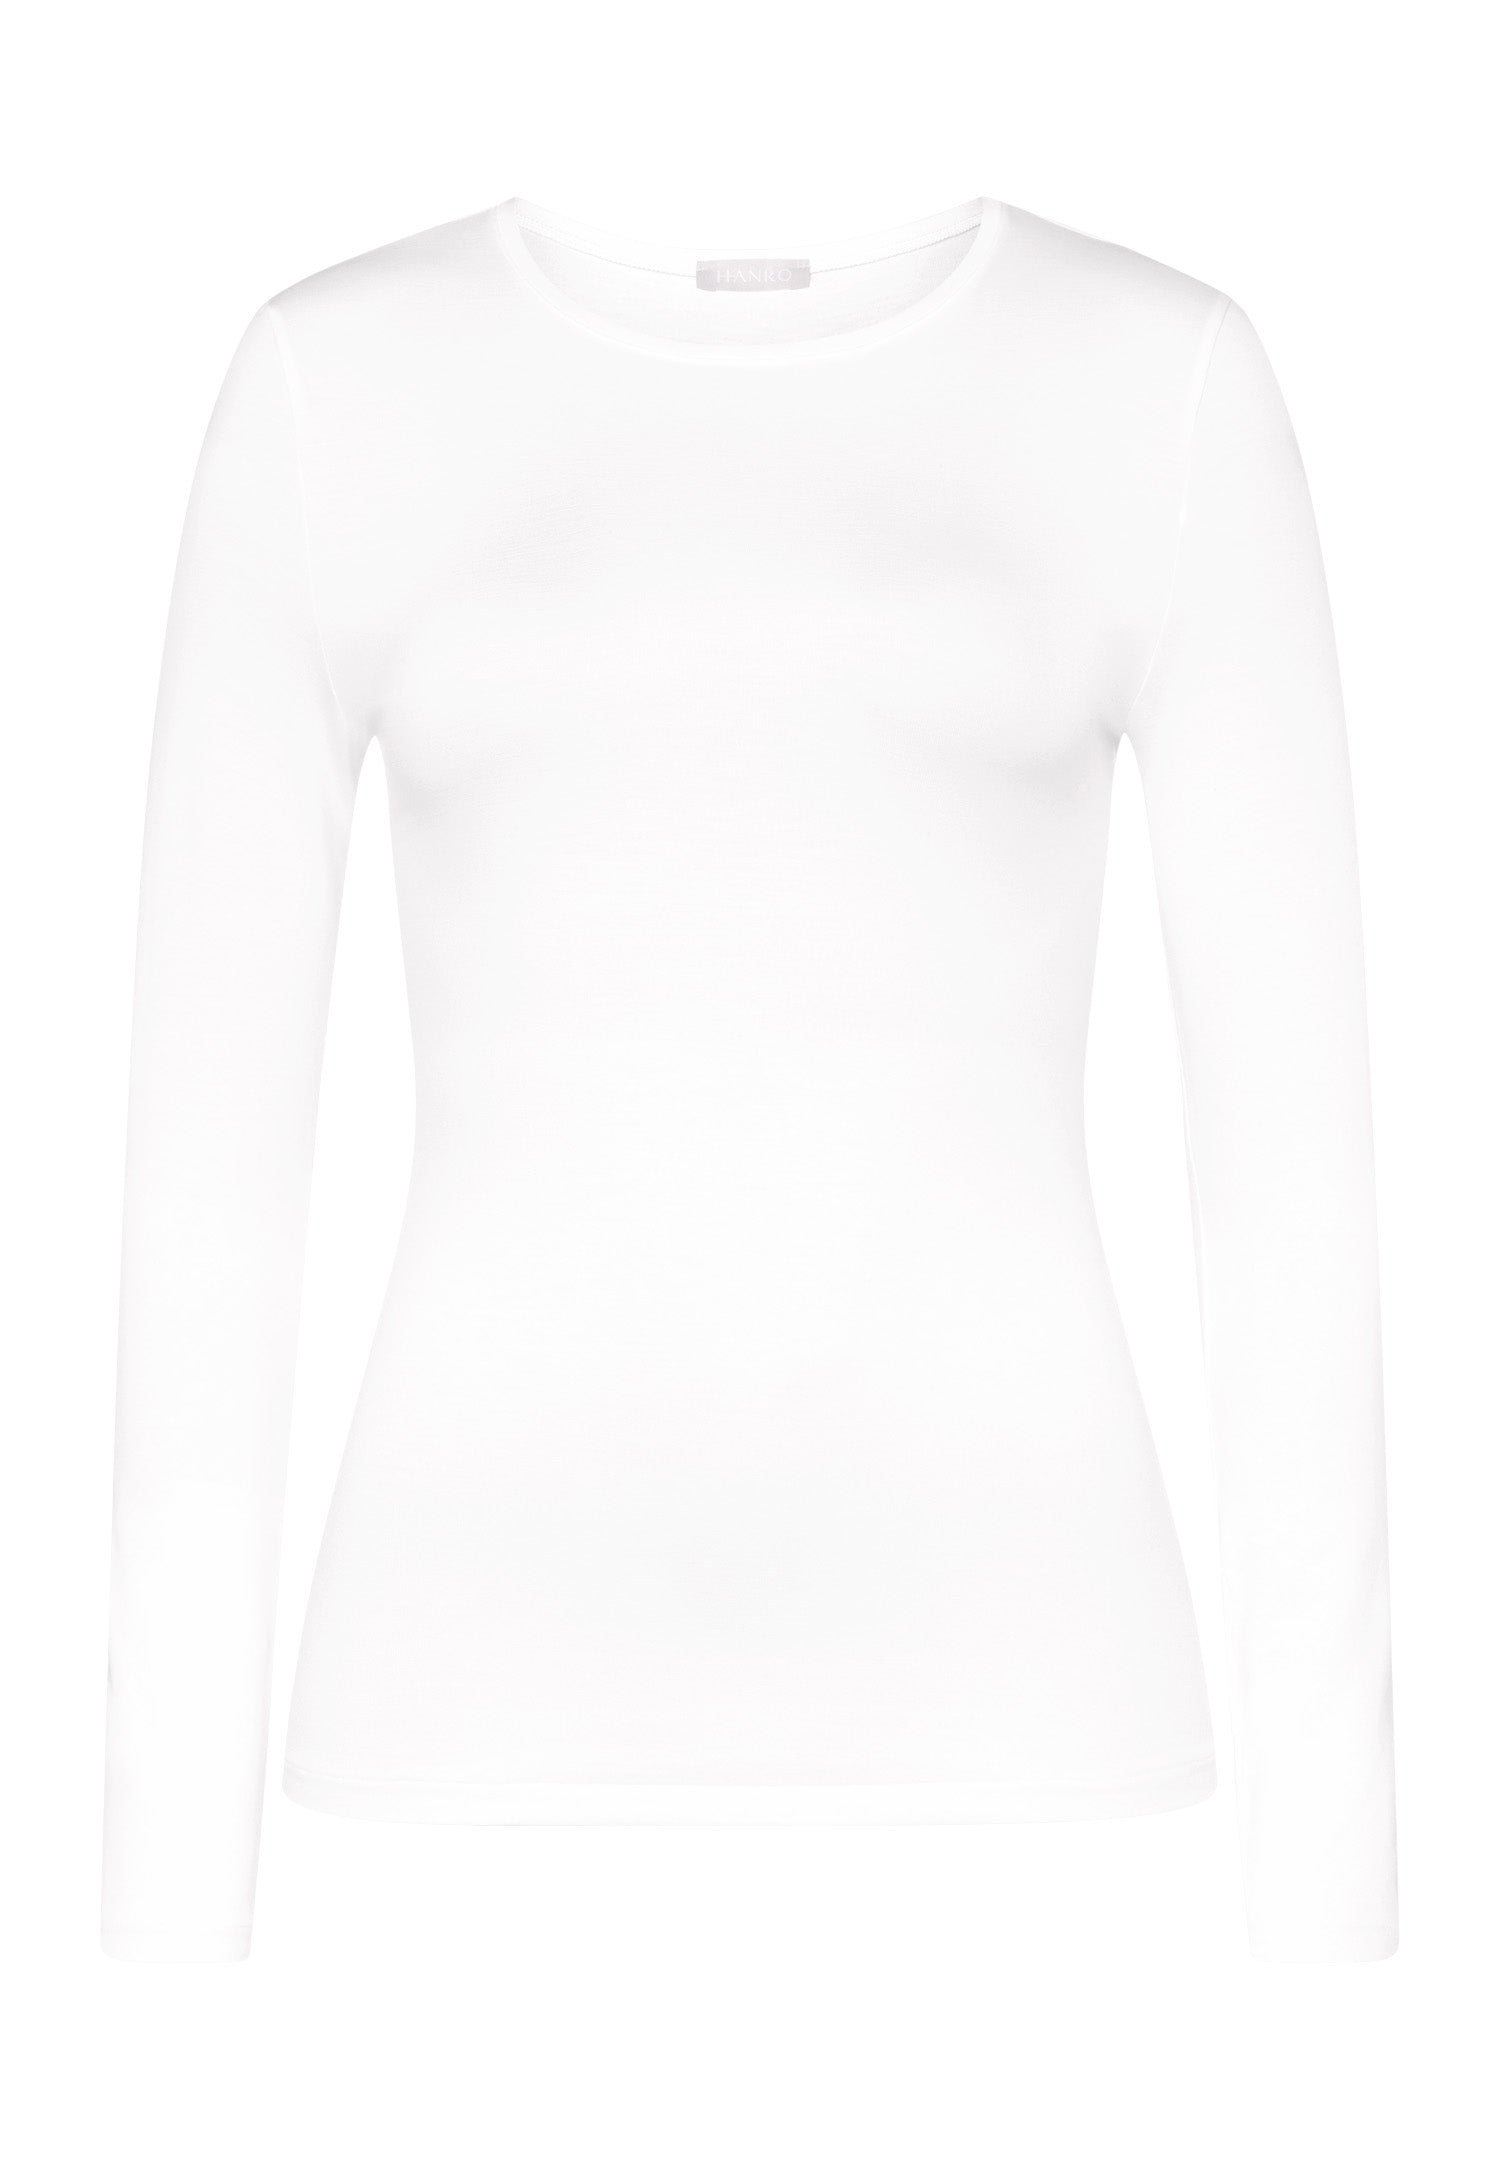 HANRO White Soft Touch Long Sleeve Shirt